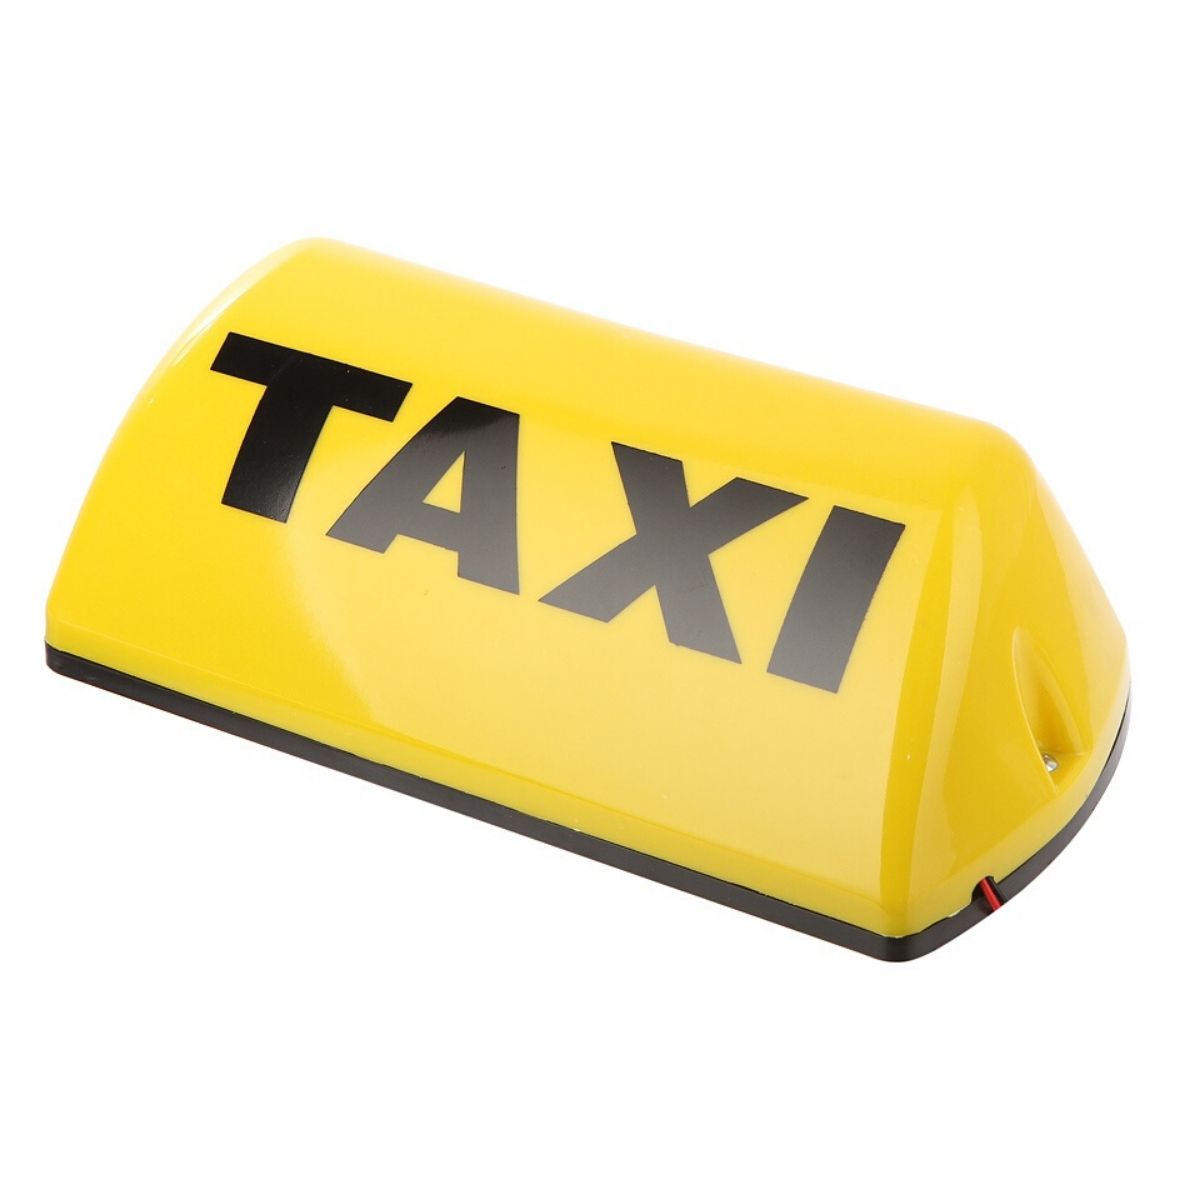 Шашки такси